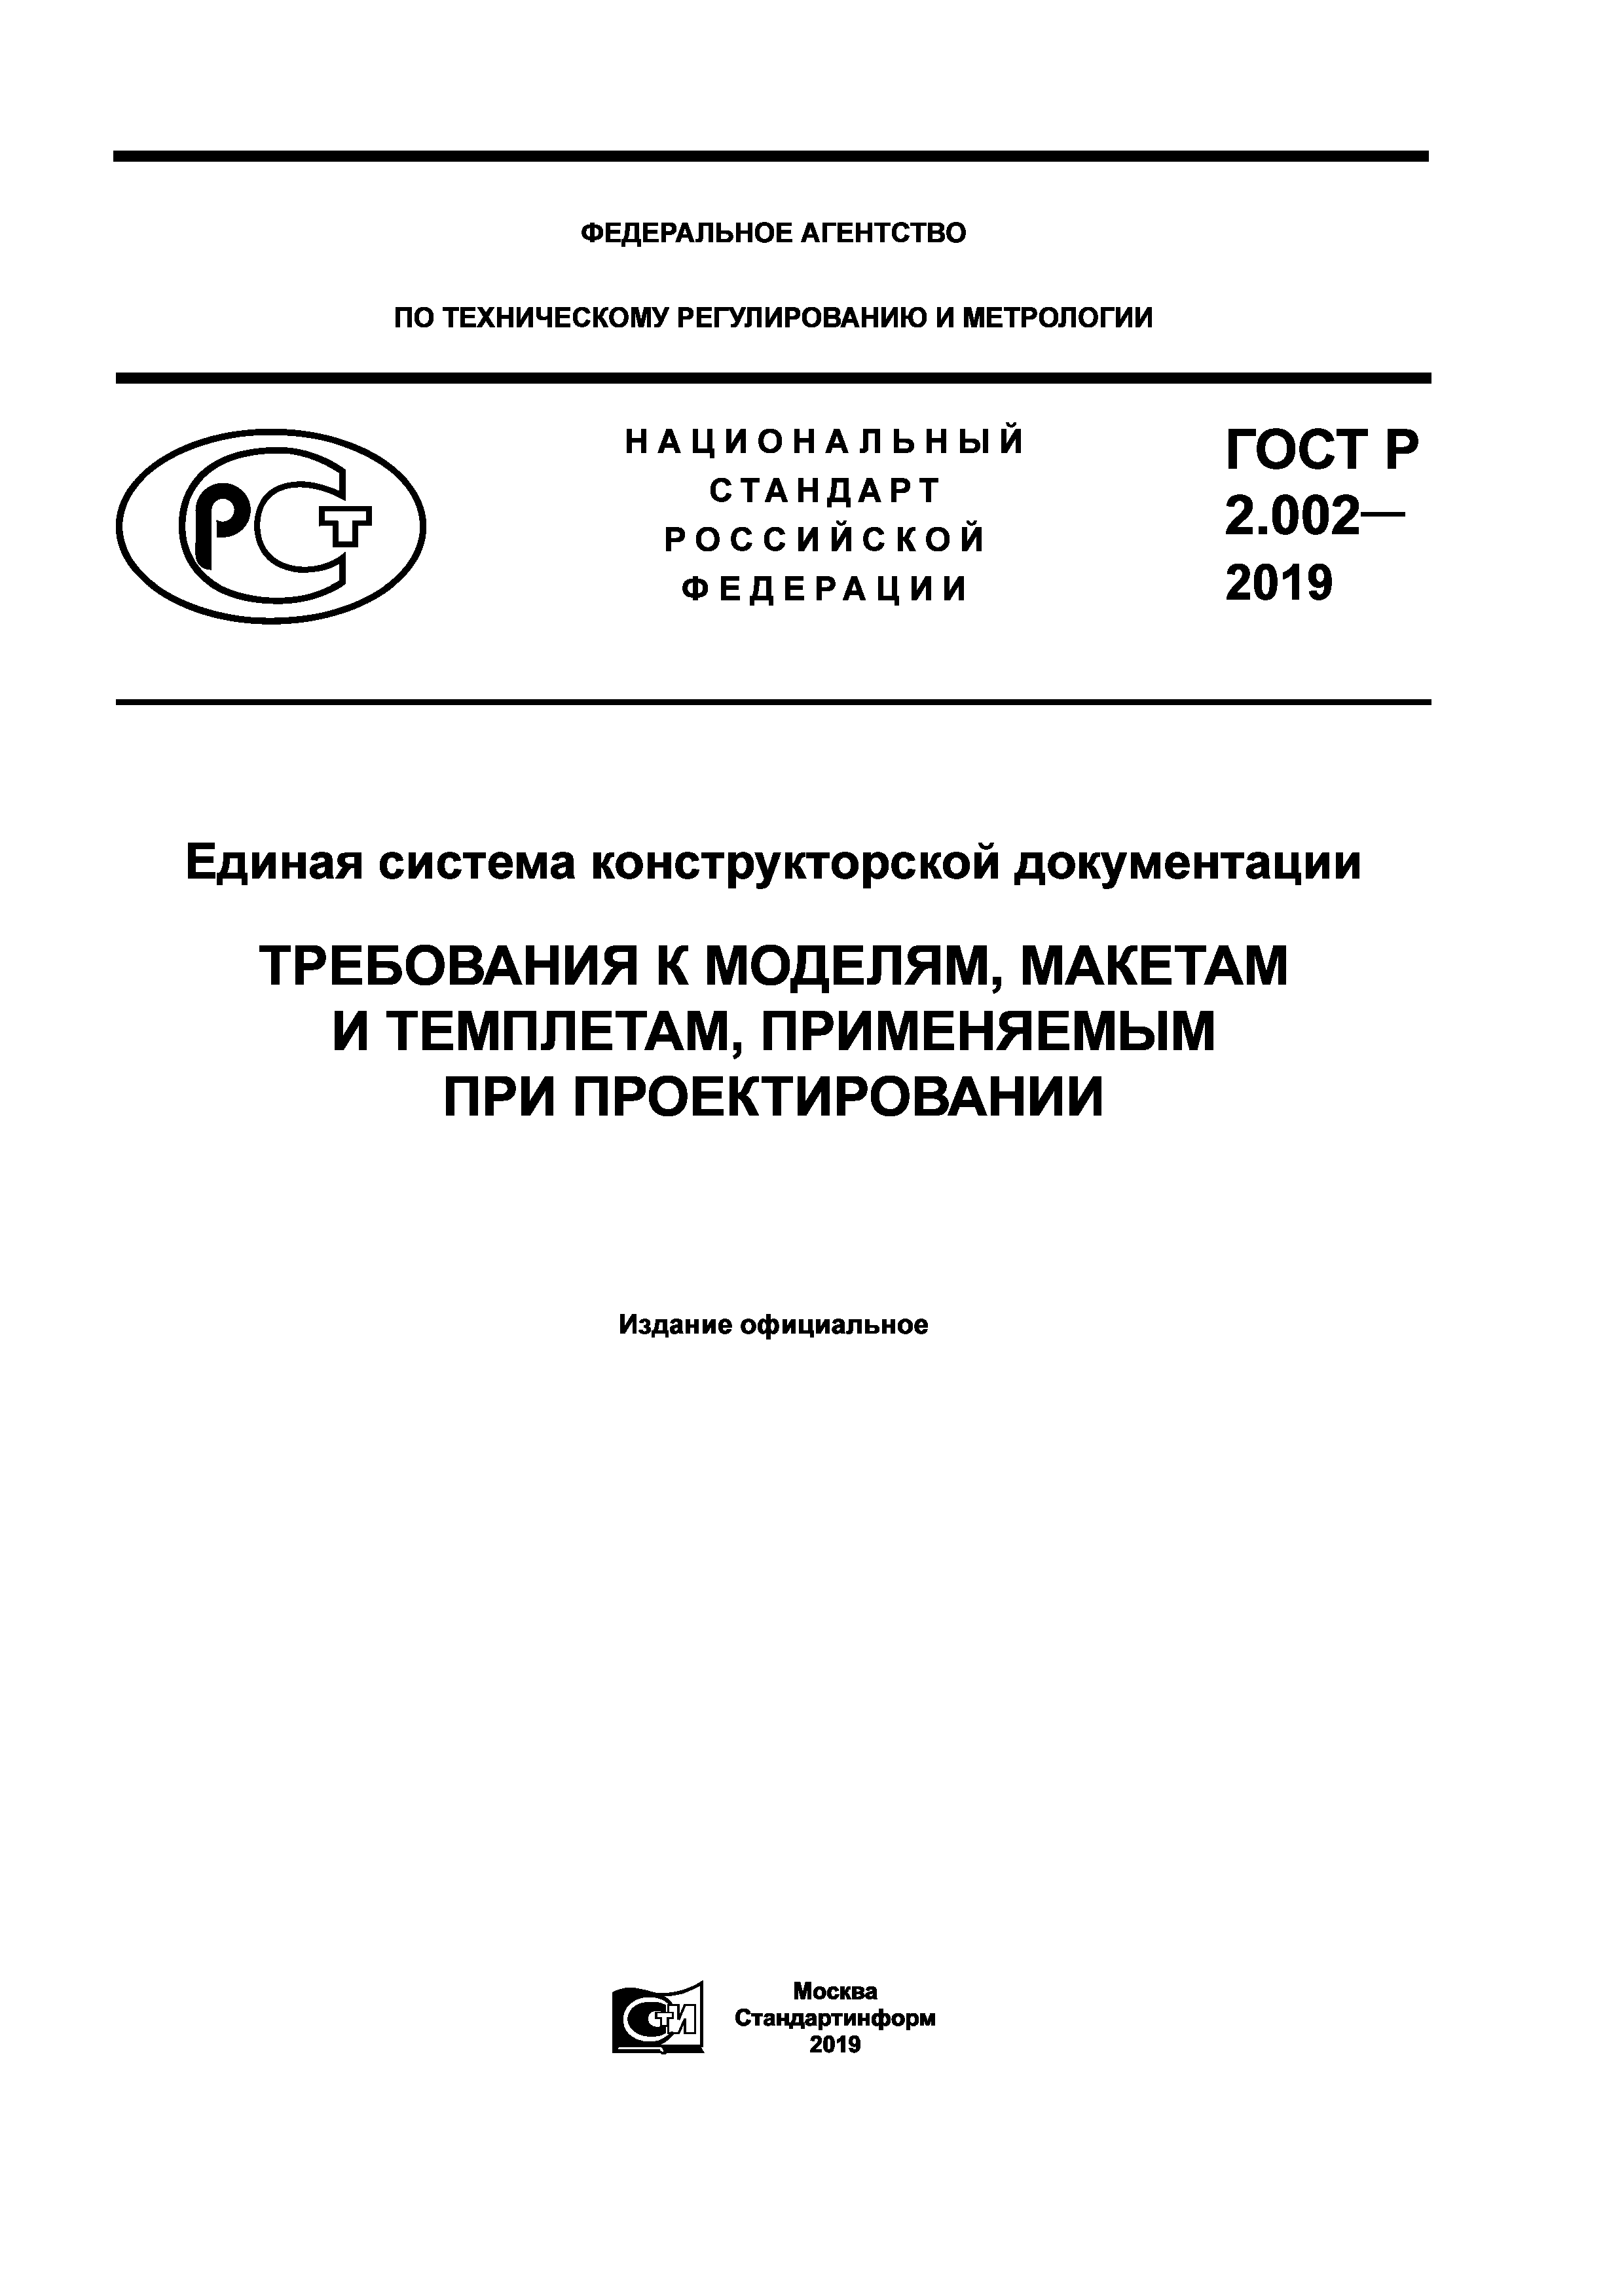 ГОСТ Р 2.002-2019